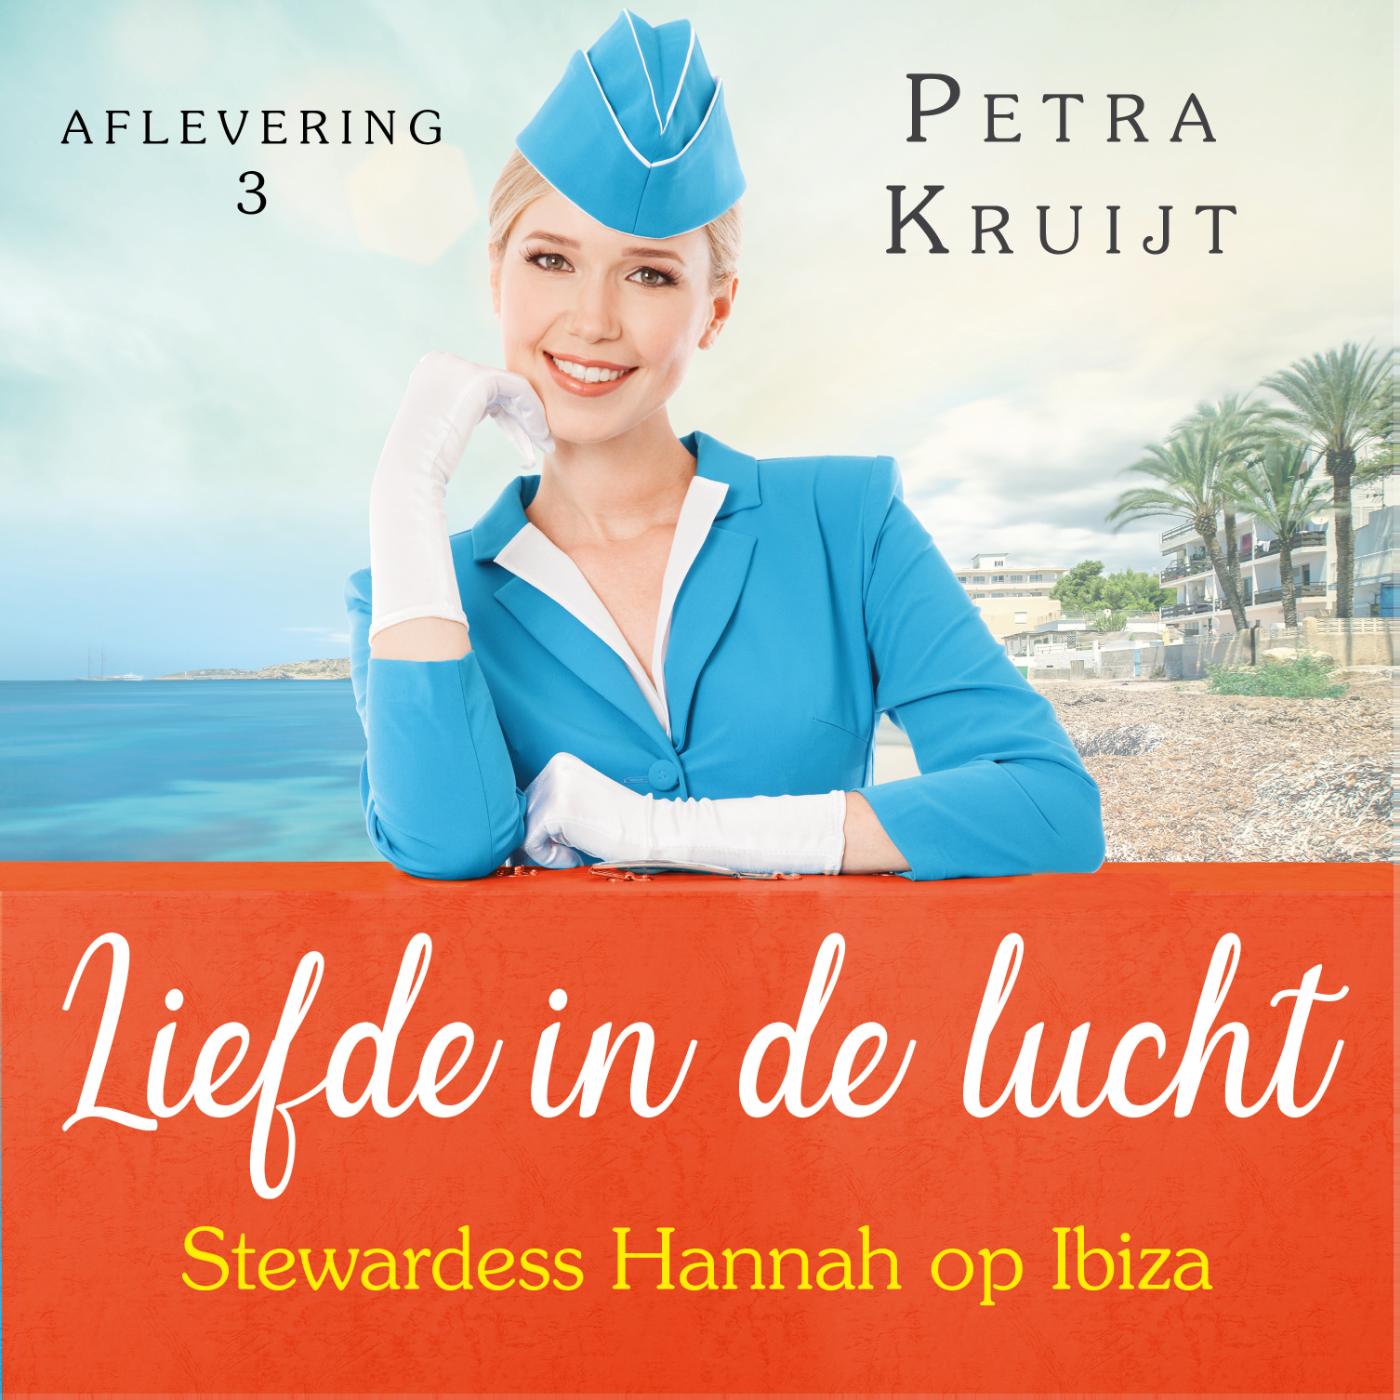 Stewardess Hannah op Ibiza (Ebook)